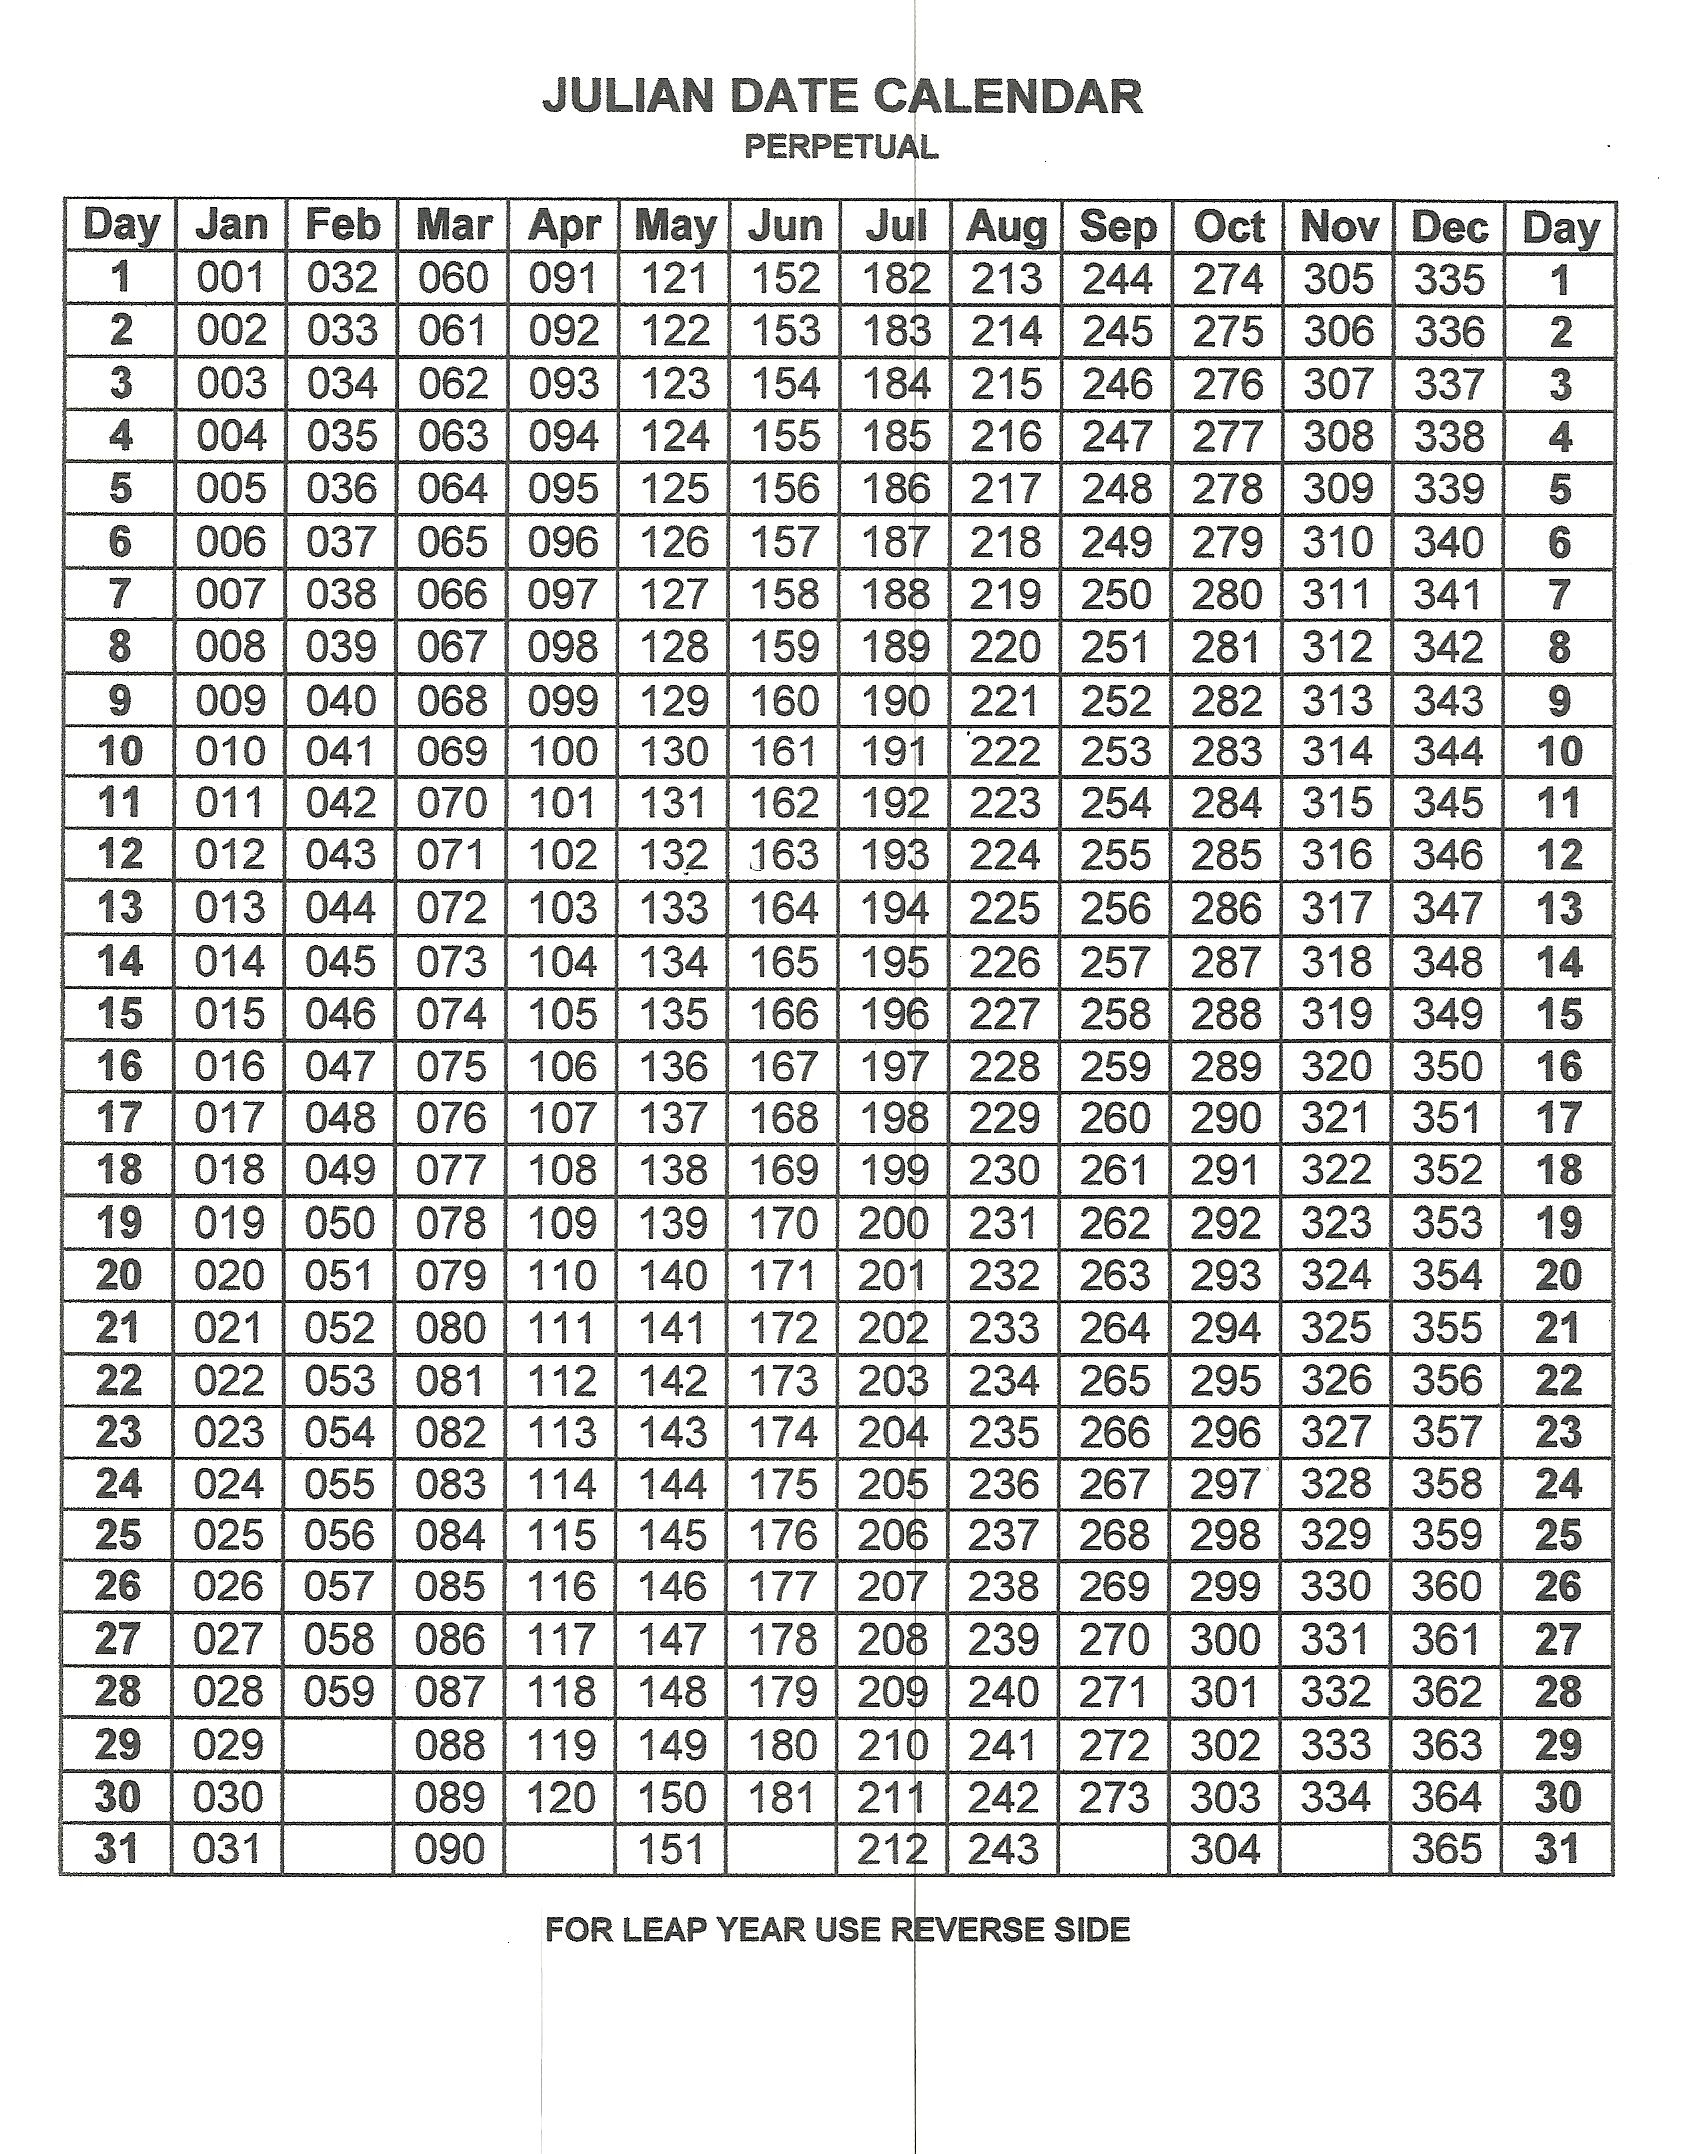 Perpetual Julian Date Calendar | Julian Dates, Calendar regarding Julian Date Calendar Perpetual